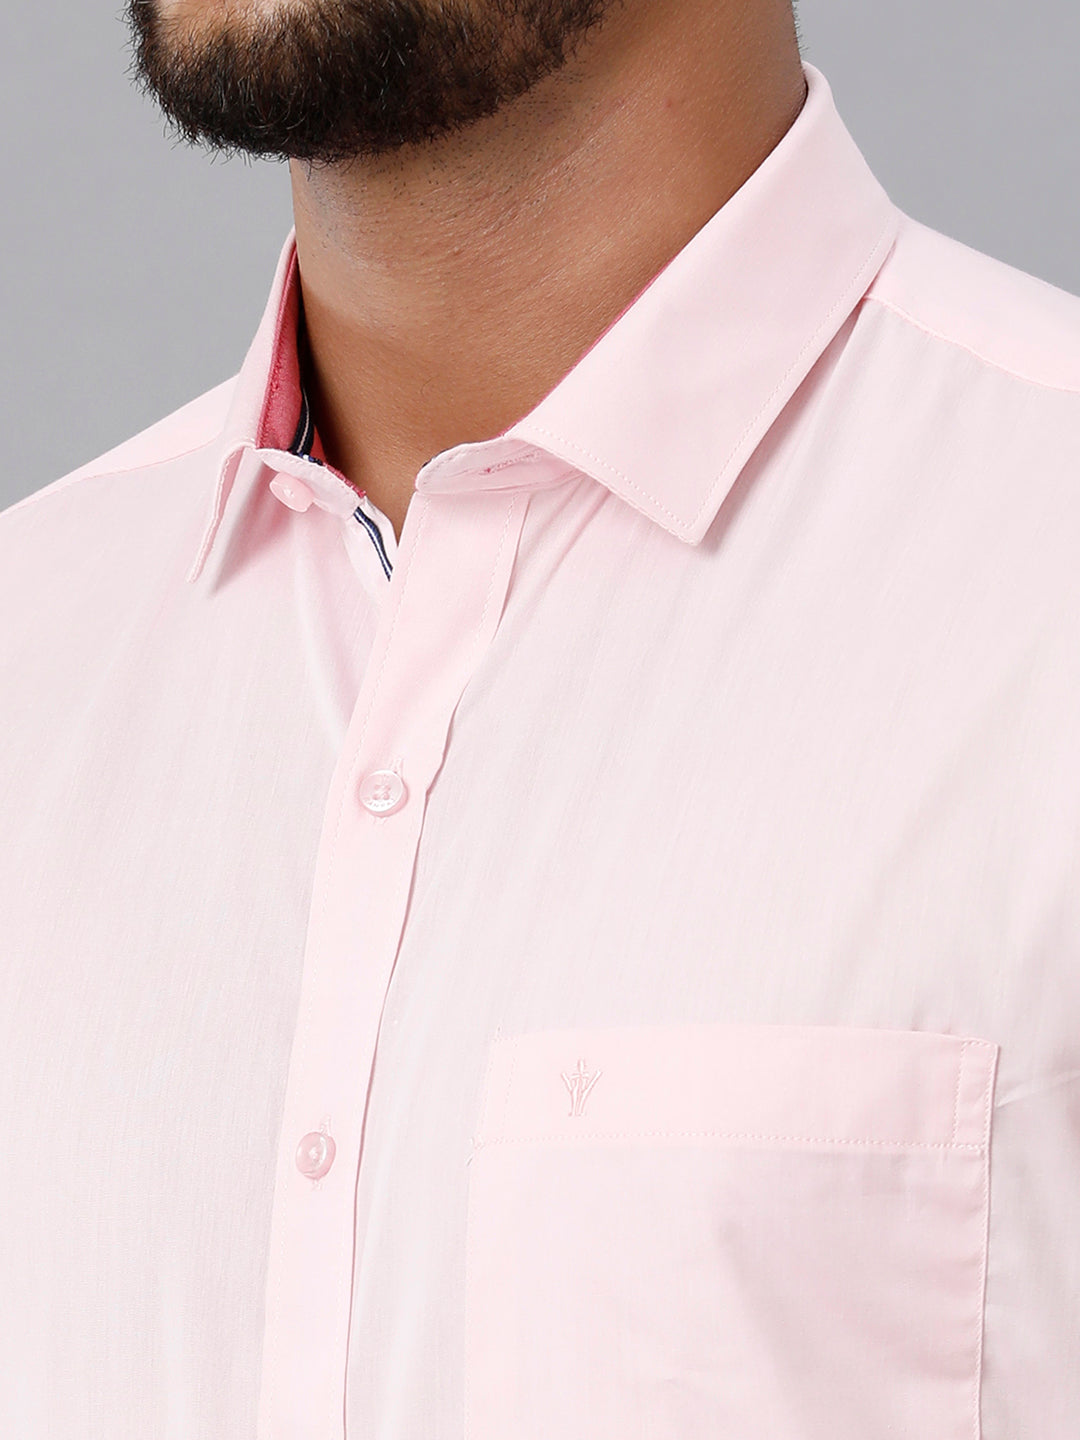 Mens Premium Cotton Formal Shirt Full Sleeves Light Pink MH G115-Zoom view